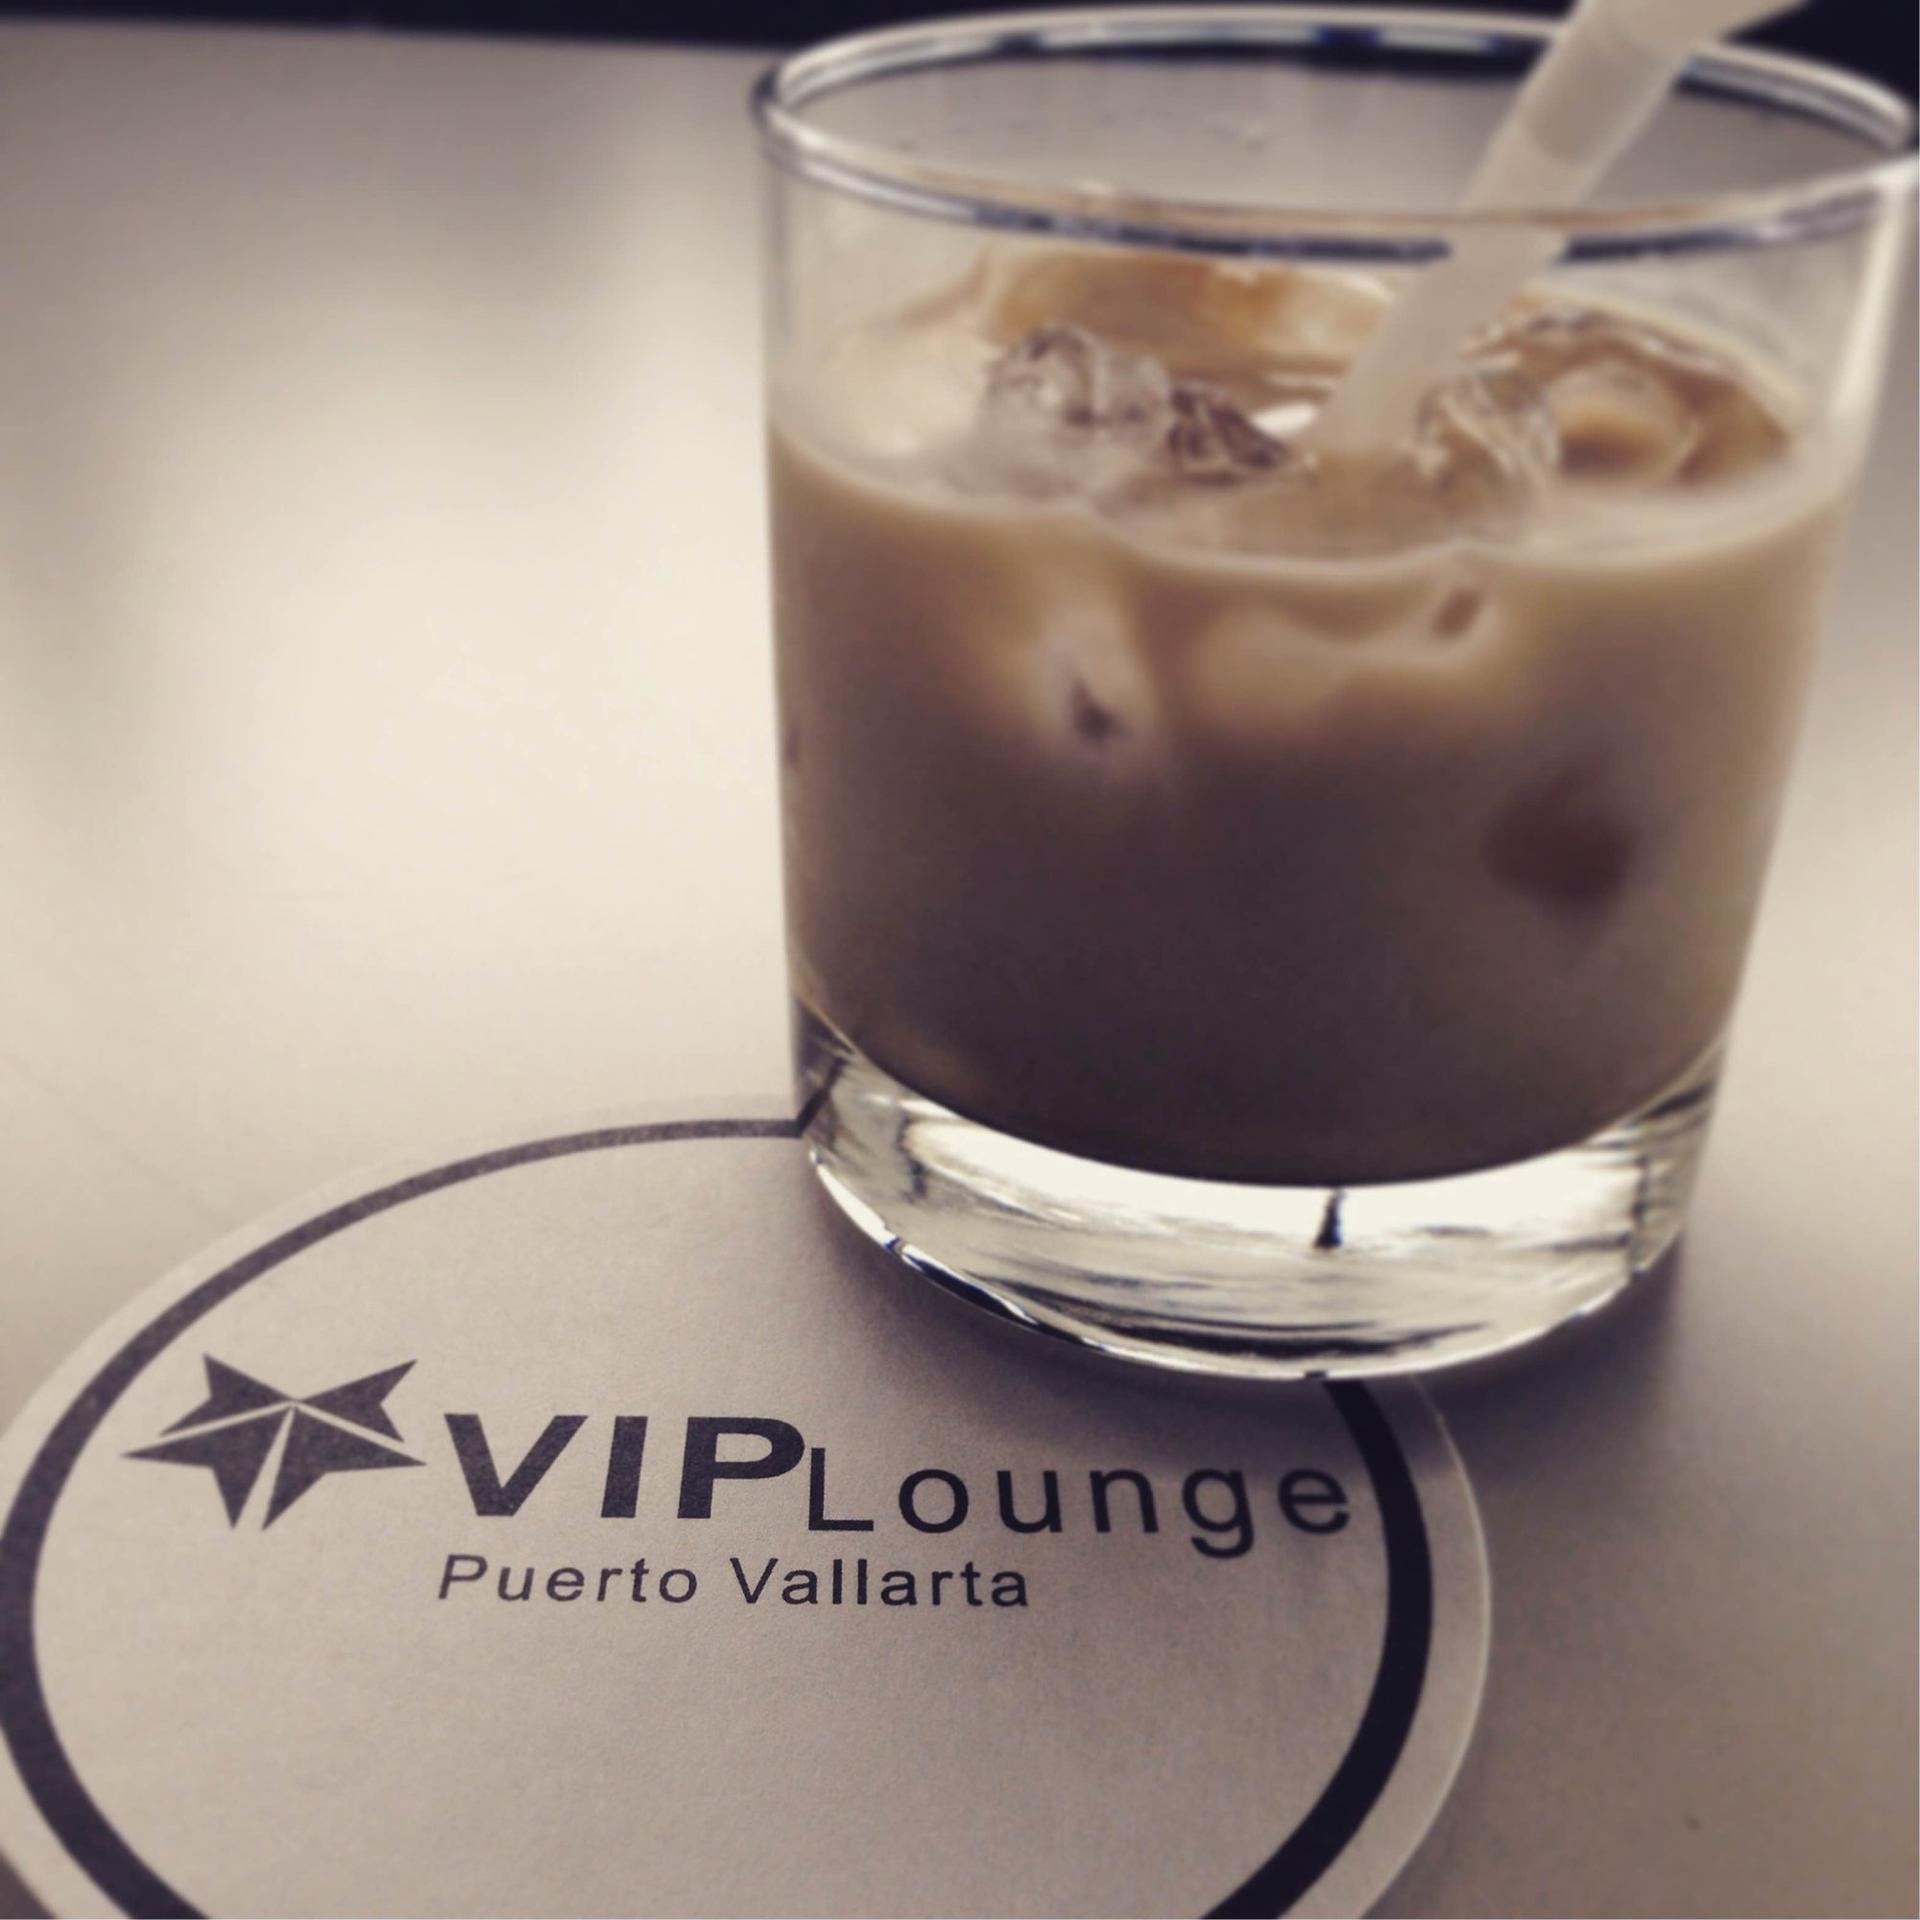 VIP Lounge image 8 of 29